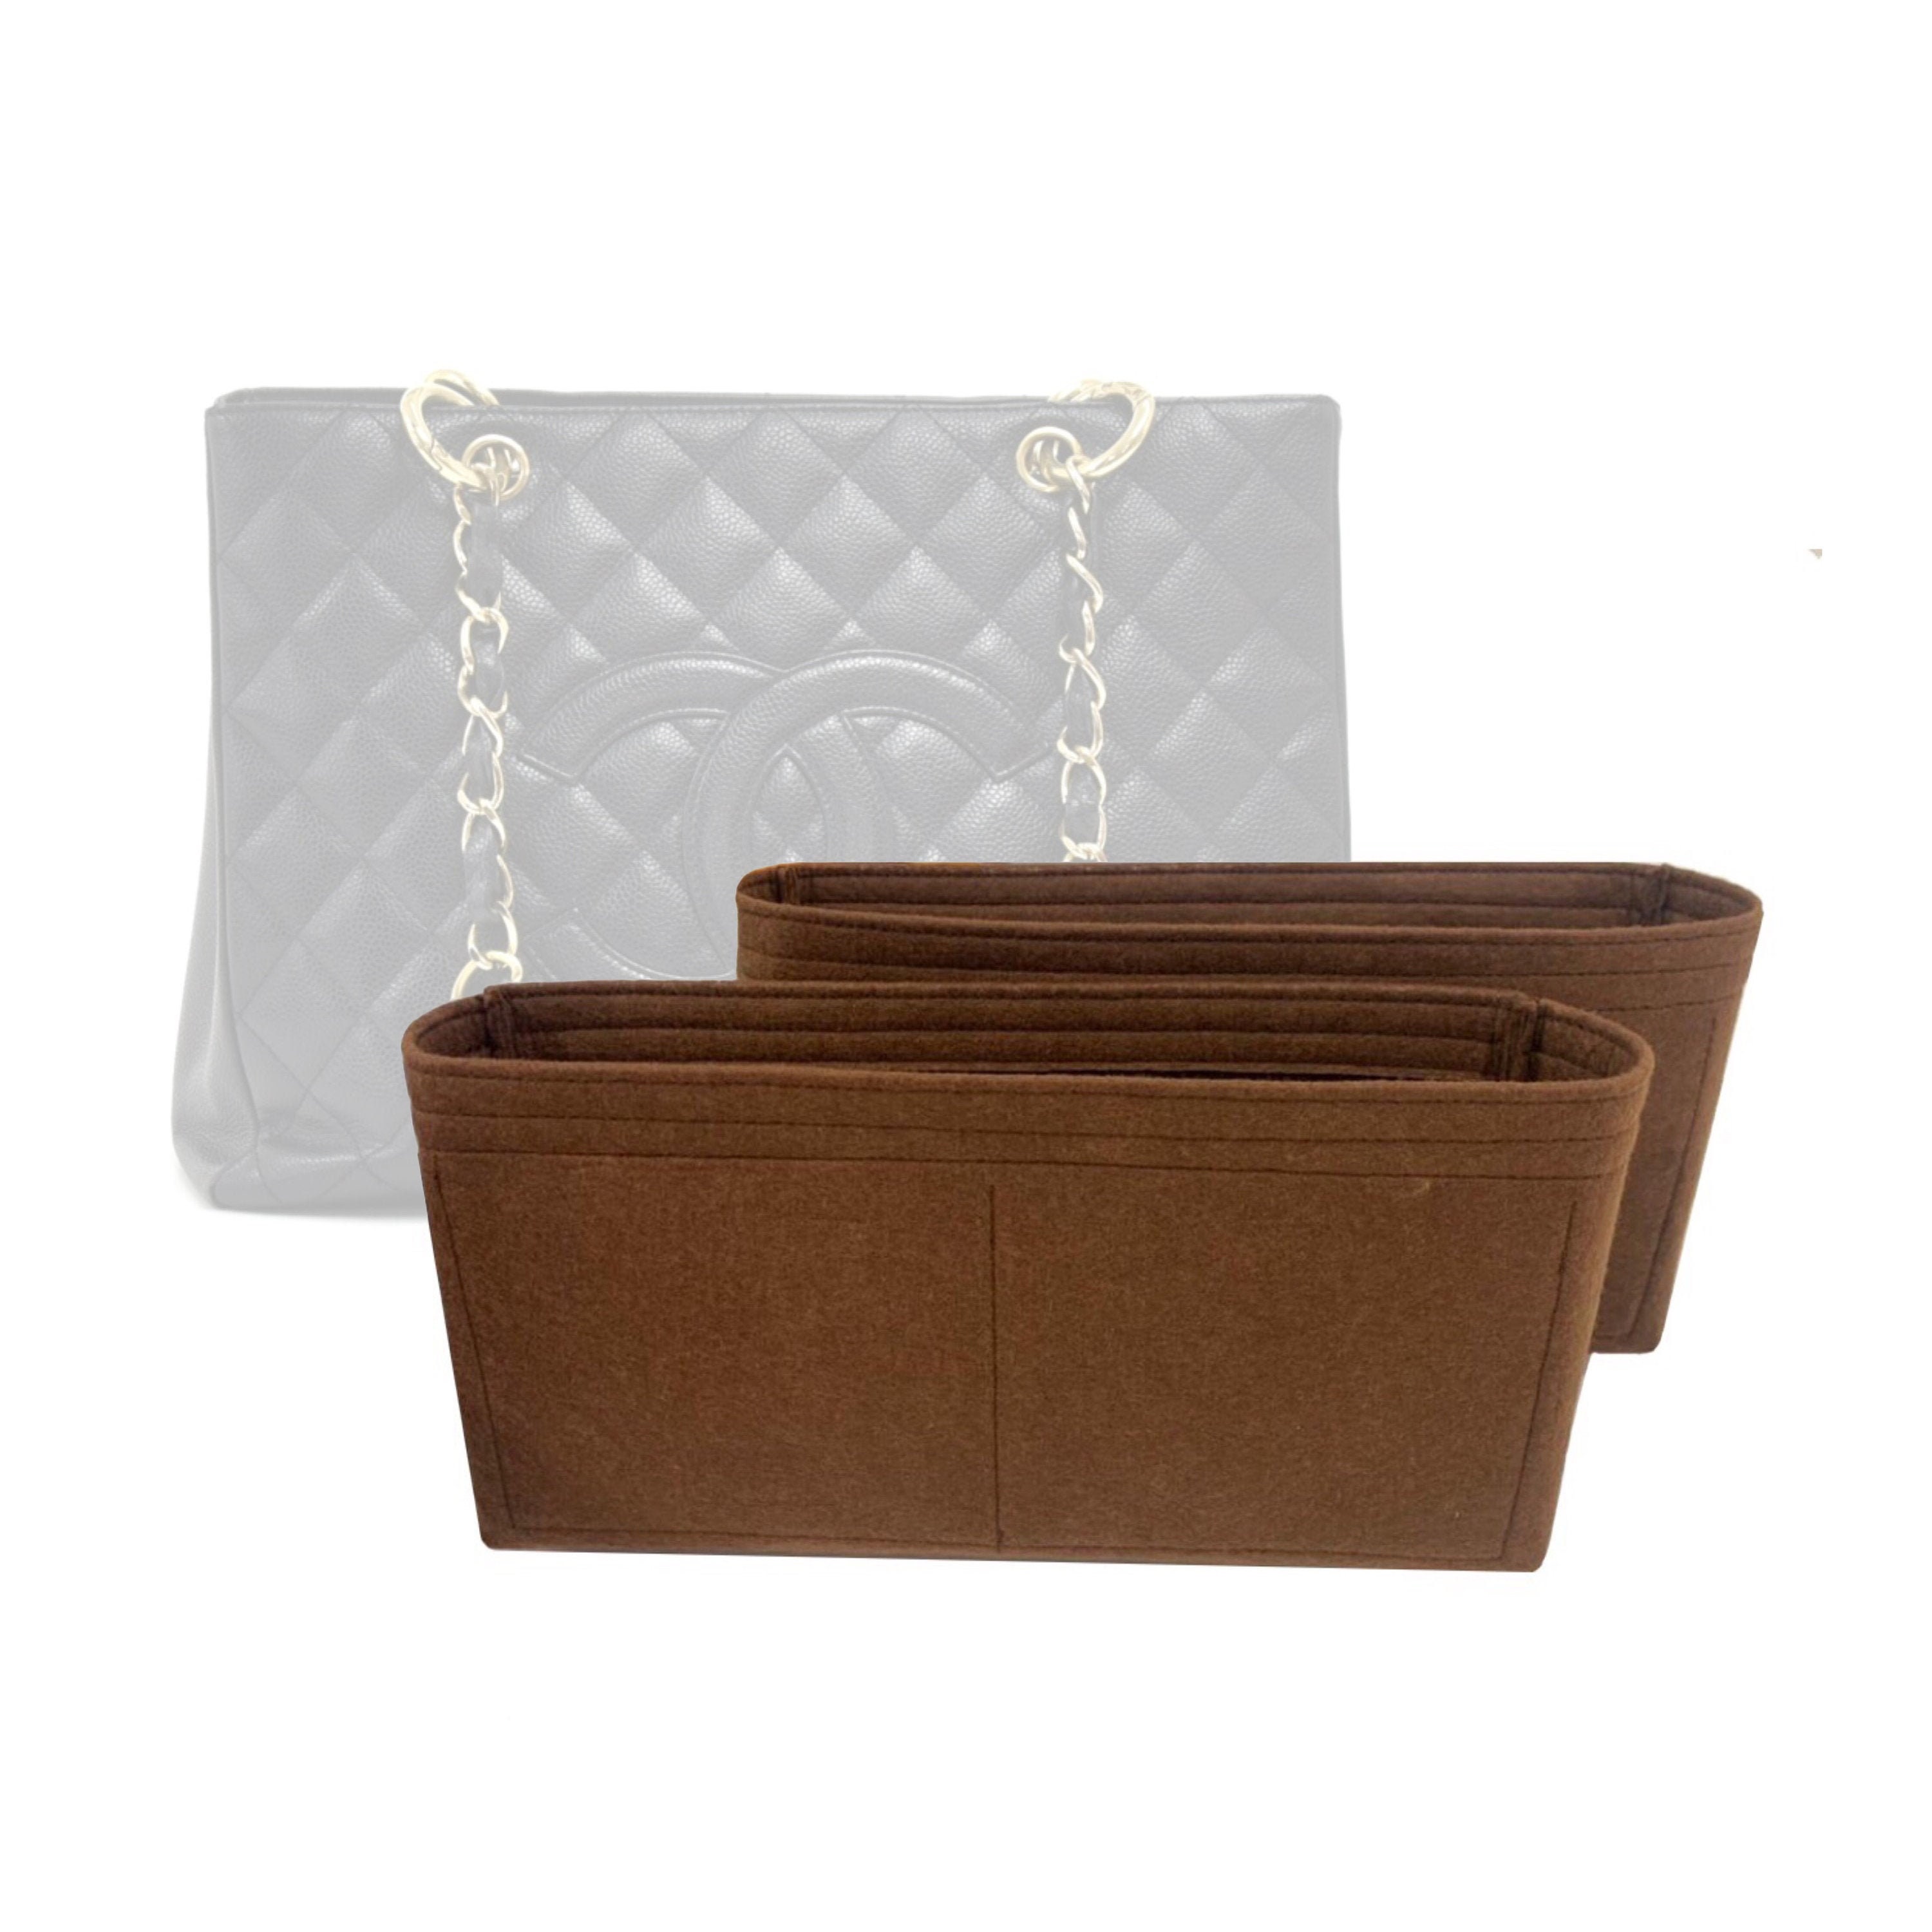 [Maxi Jumbo XL Flap Organizer] Felt Purse Insert with Middle Zip Pouch, Customized Tote Organize, Bag in Handbag (Style B) Khaki